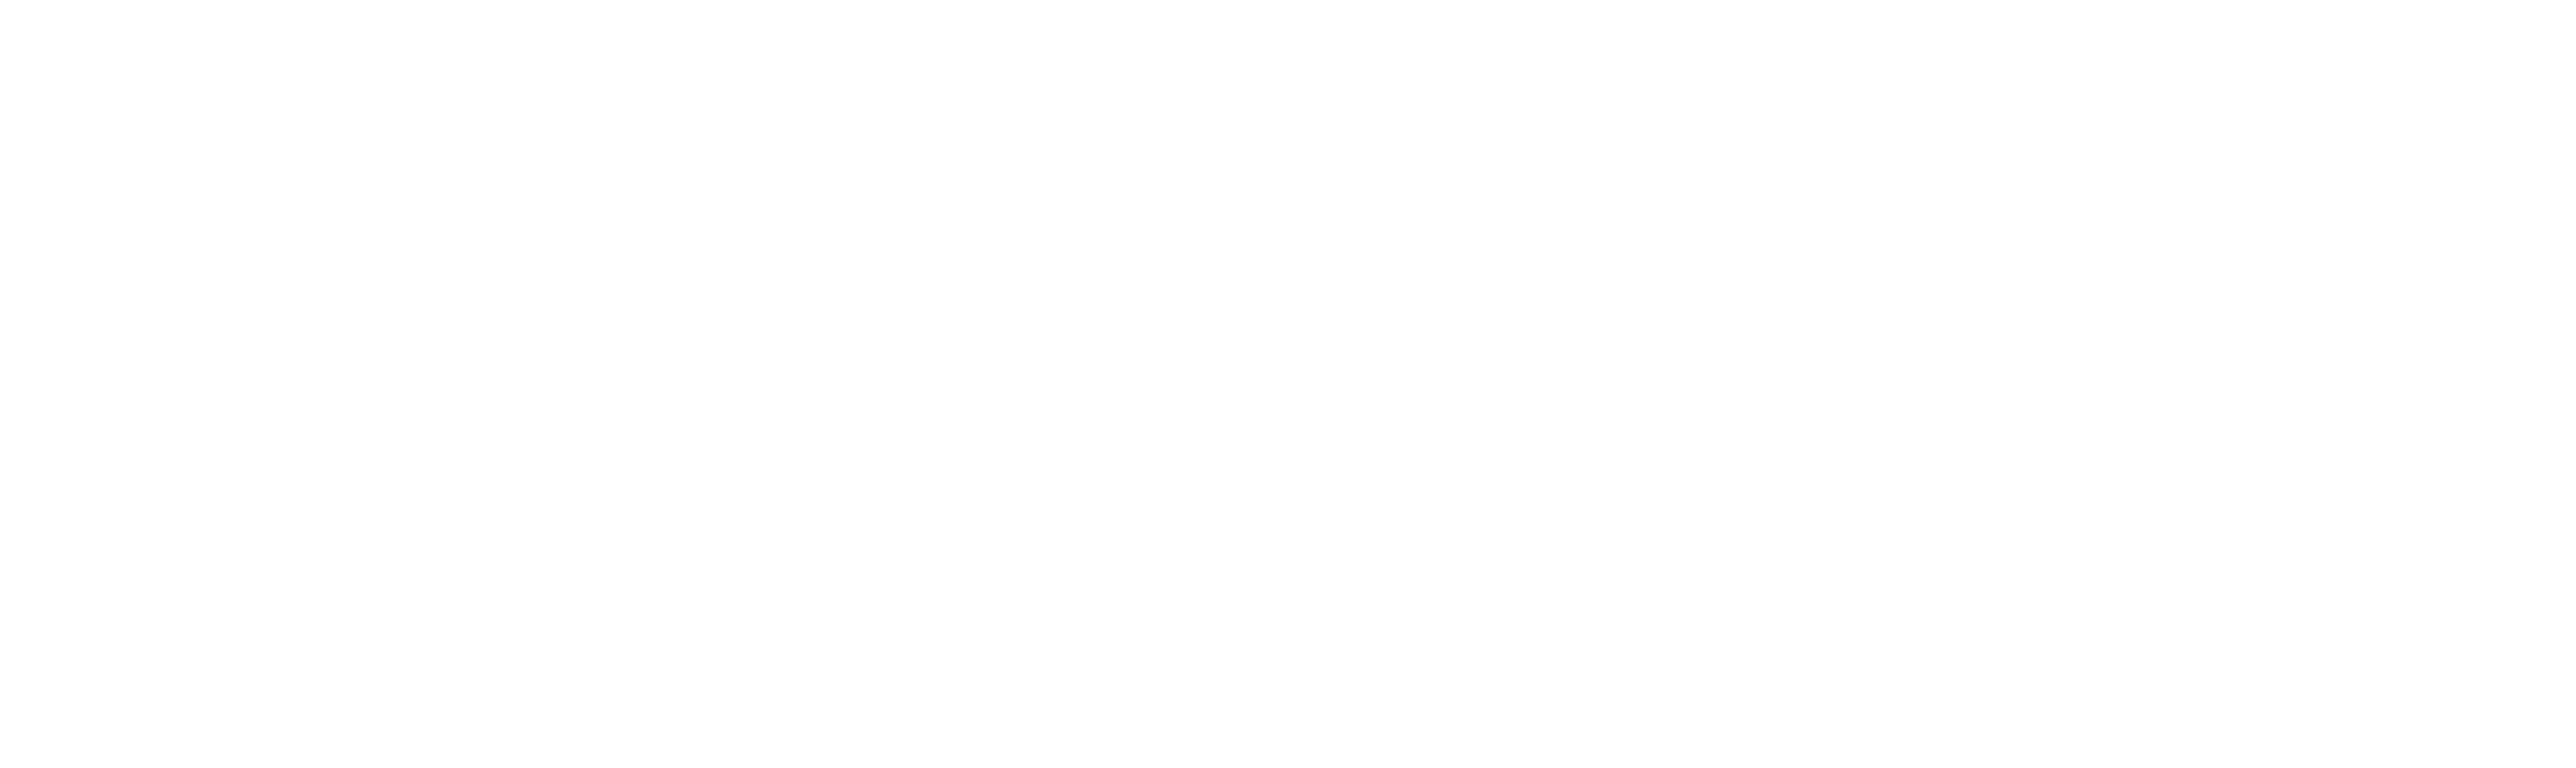 Childrens Rights Service Nottingham logo in white